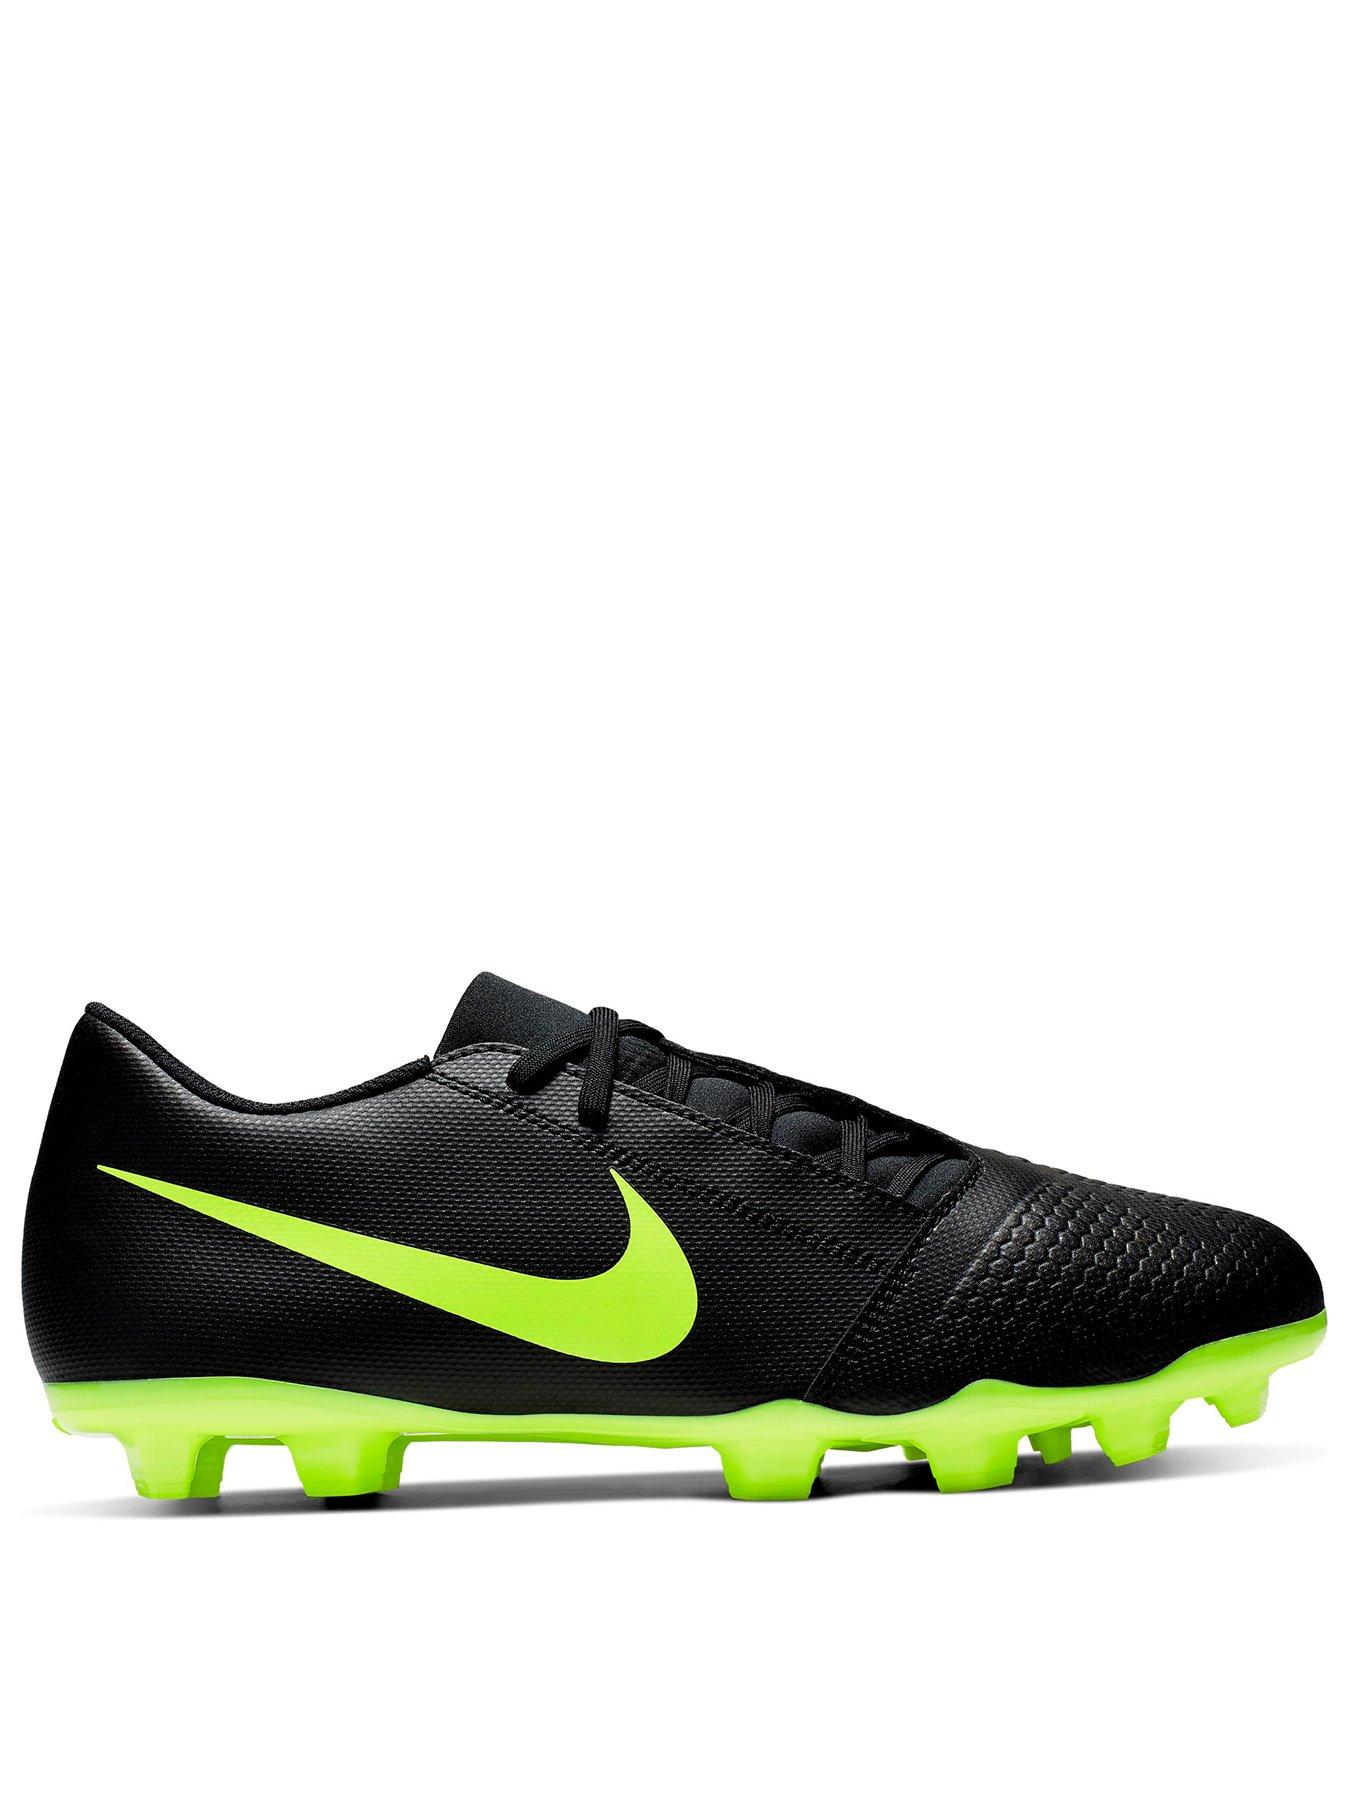 Nike PhantomVSN Pro Dynamic Fit FG Black Soccerloco